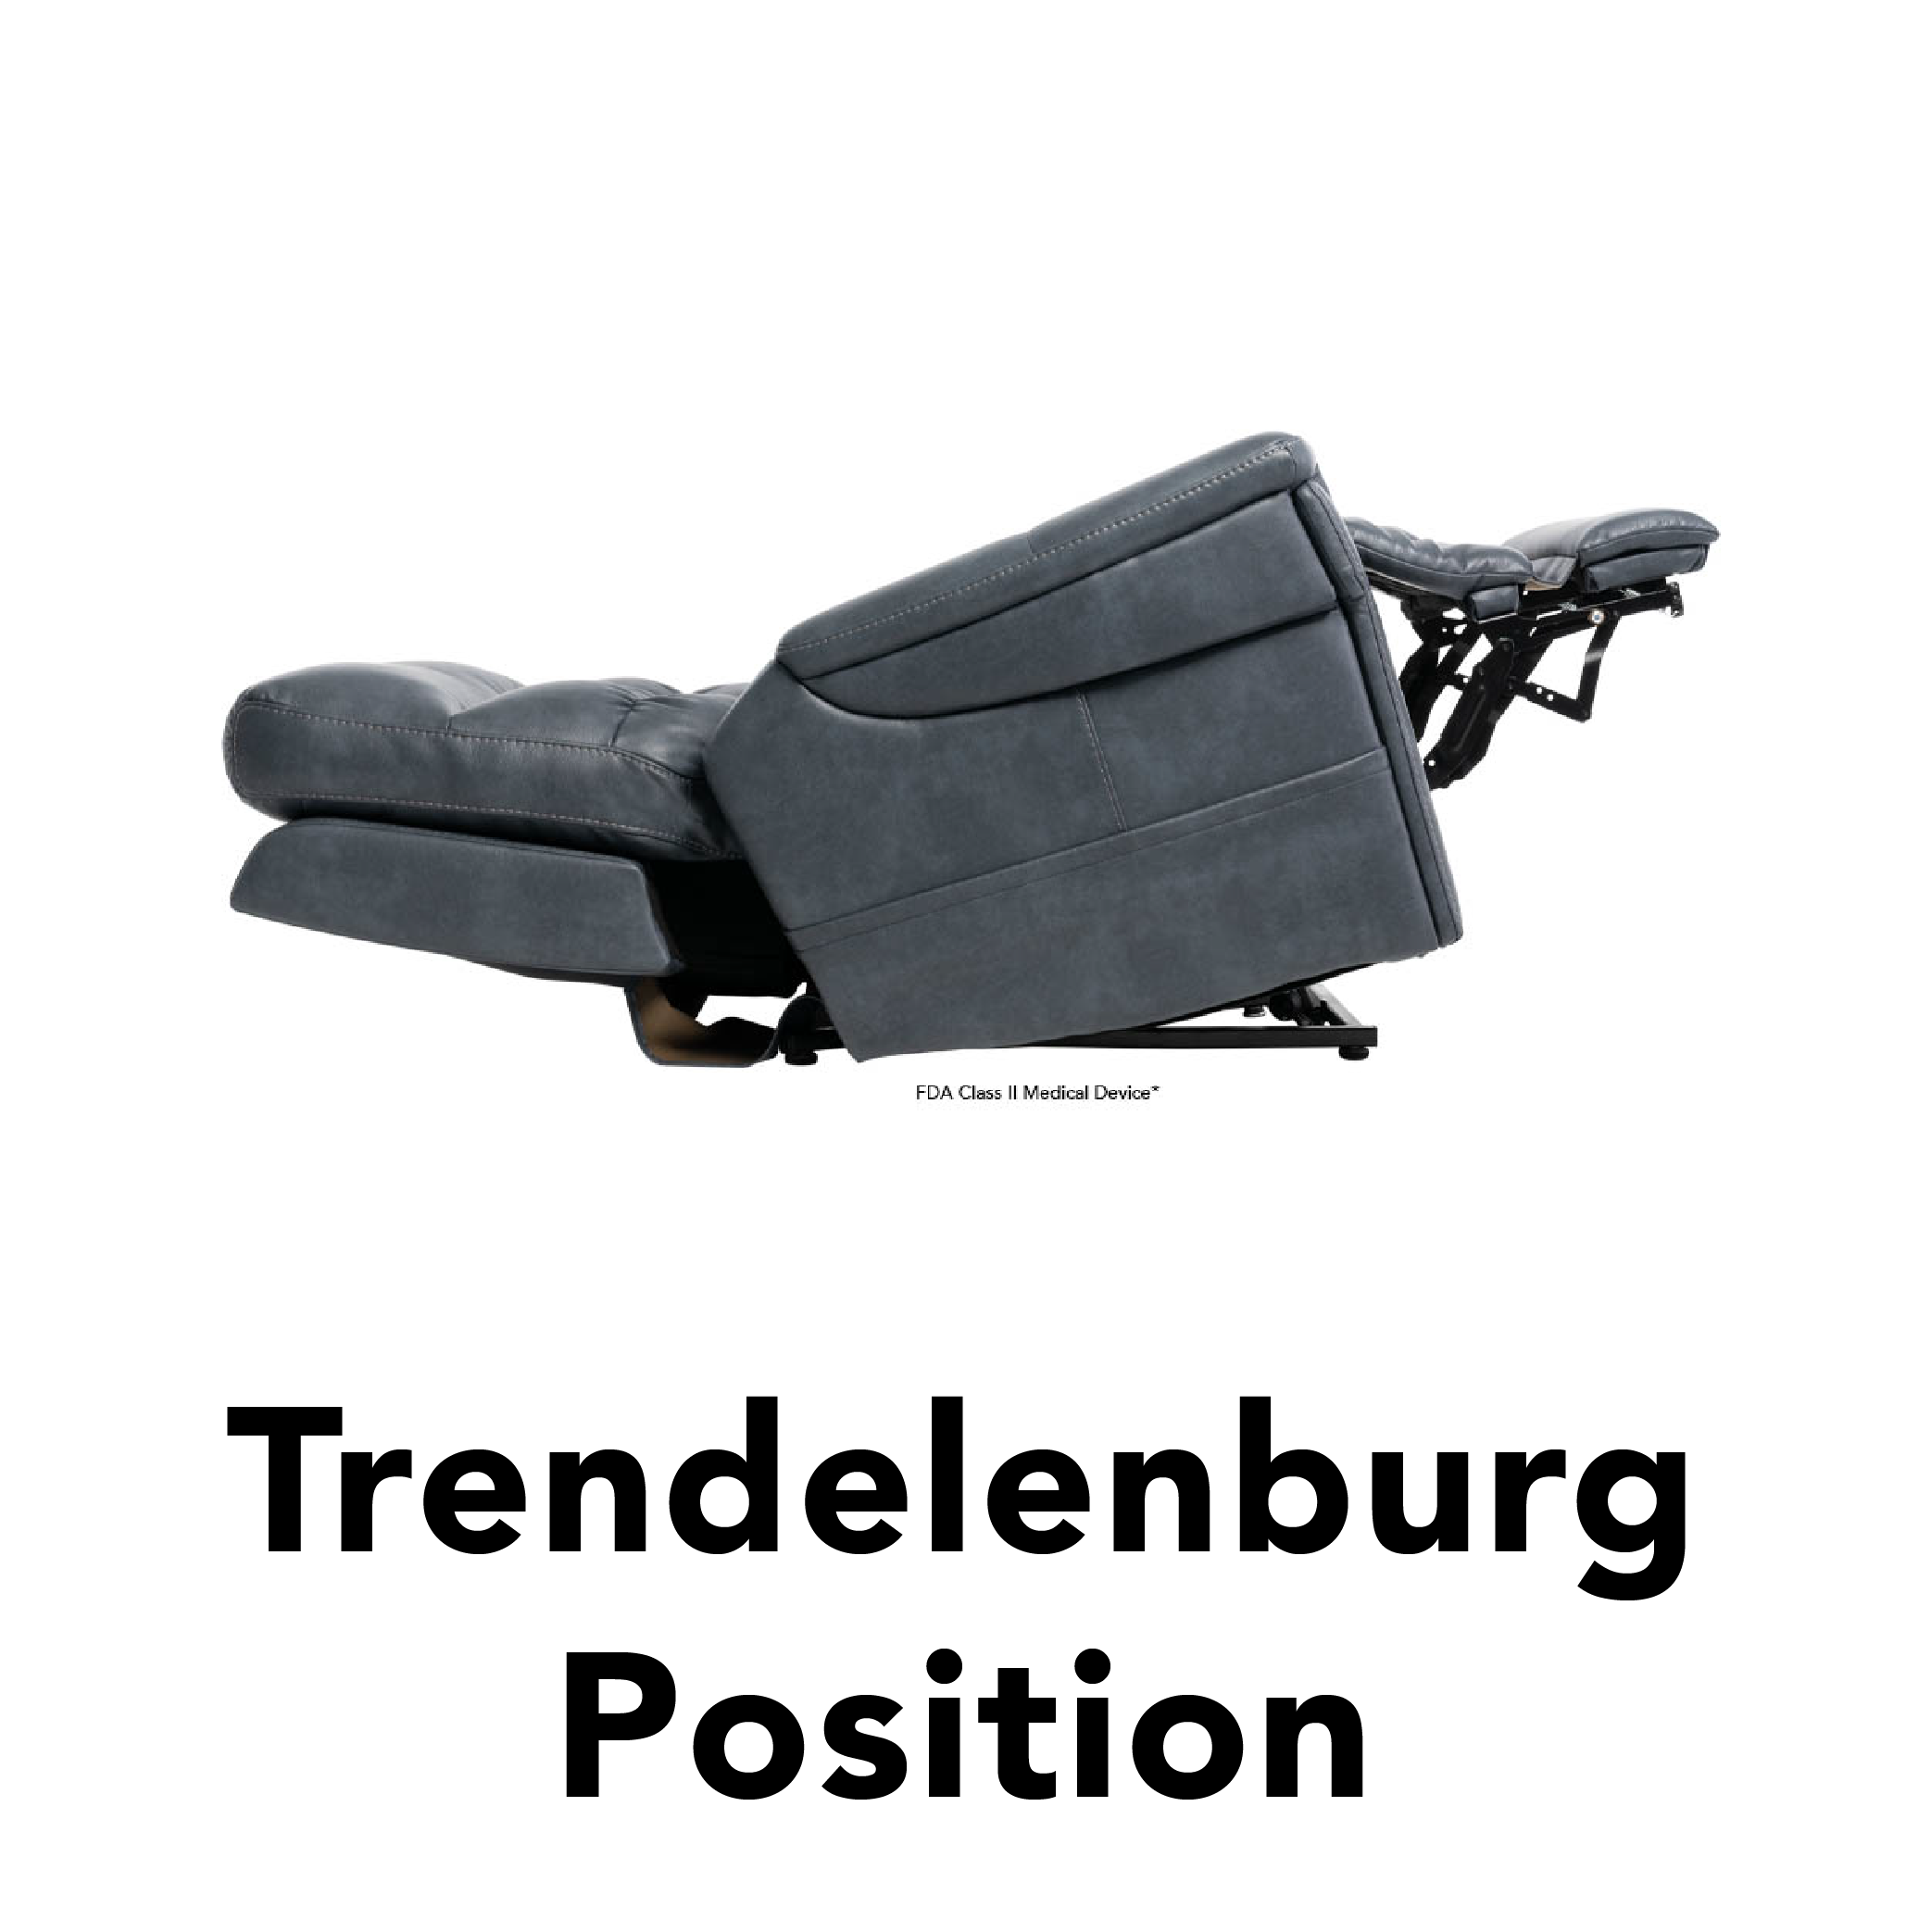 trendelenburg position lift chairs category